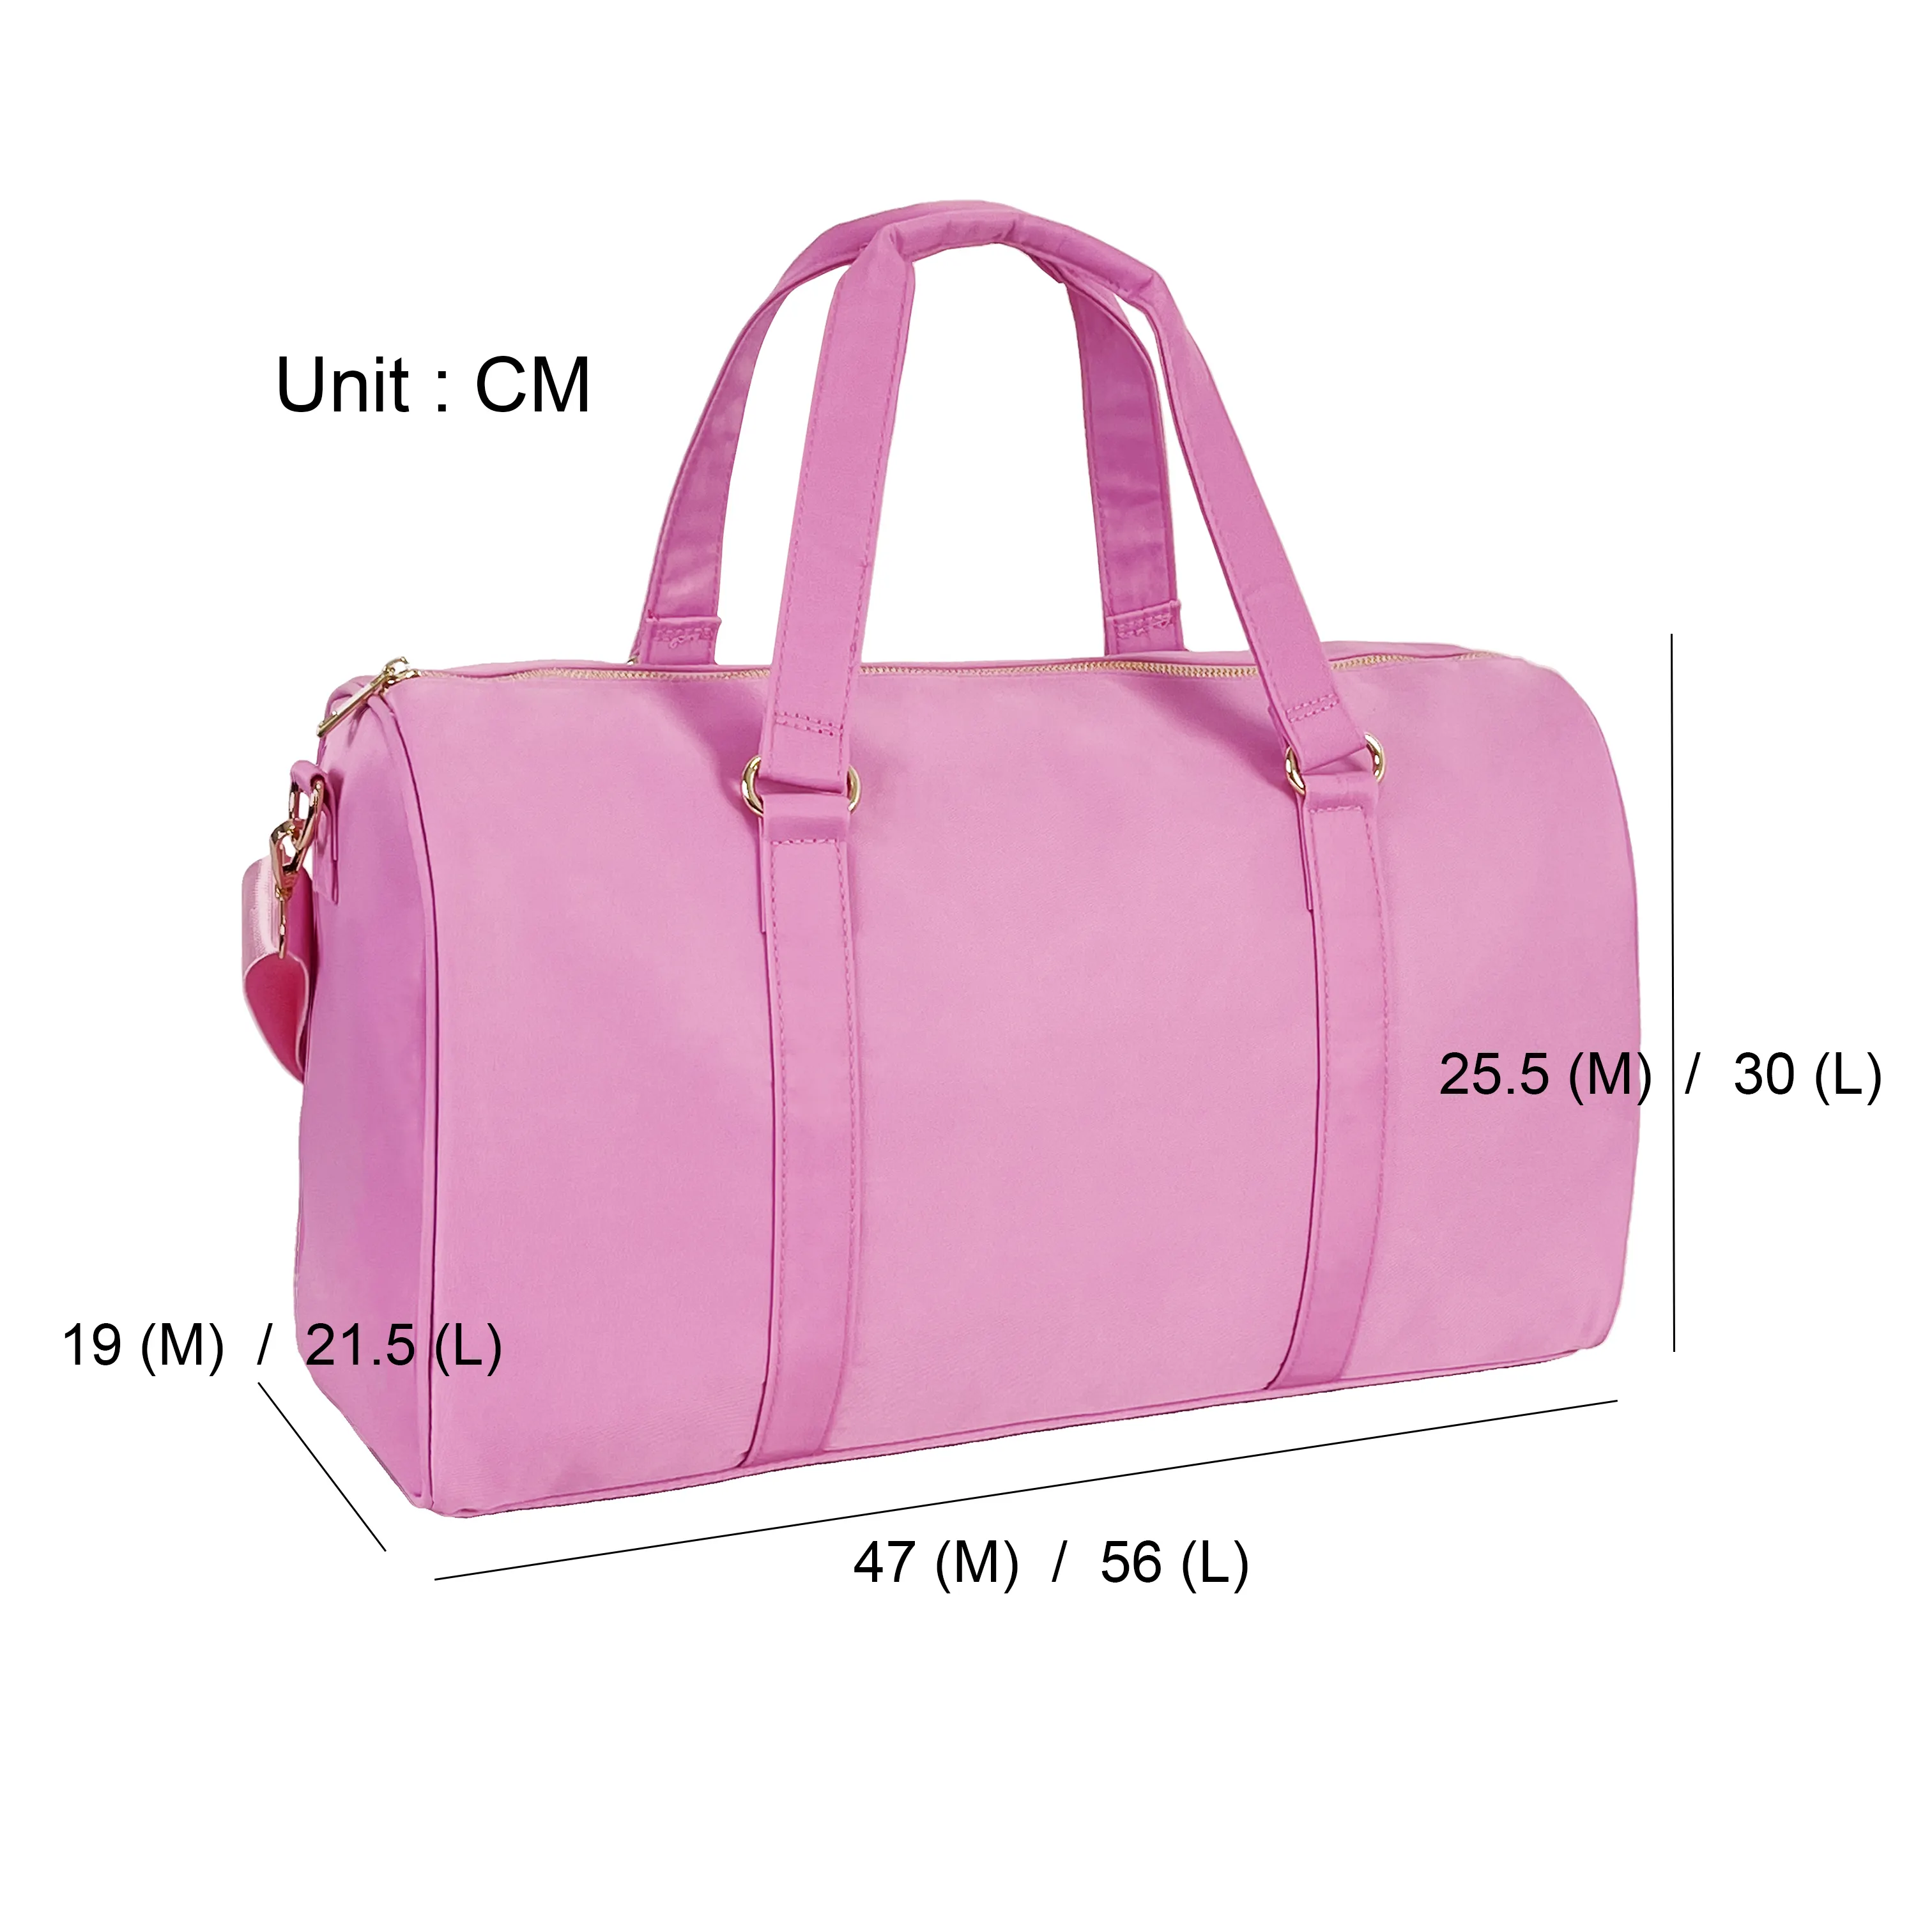 Luxury Stoney Clover Stock Classic Waterproof Weekend Gym Sports Duffel Bag Nylon Travel luggage Bag Pink Duffle Bag for women